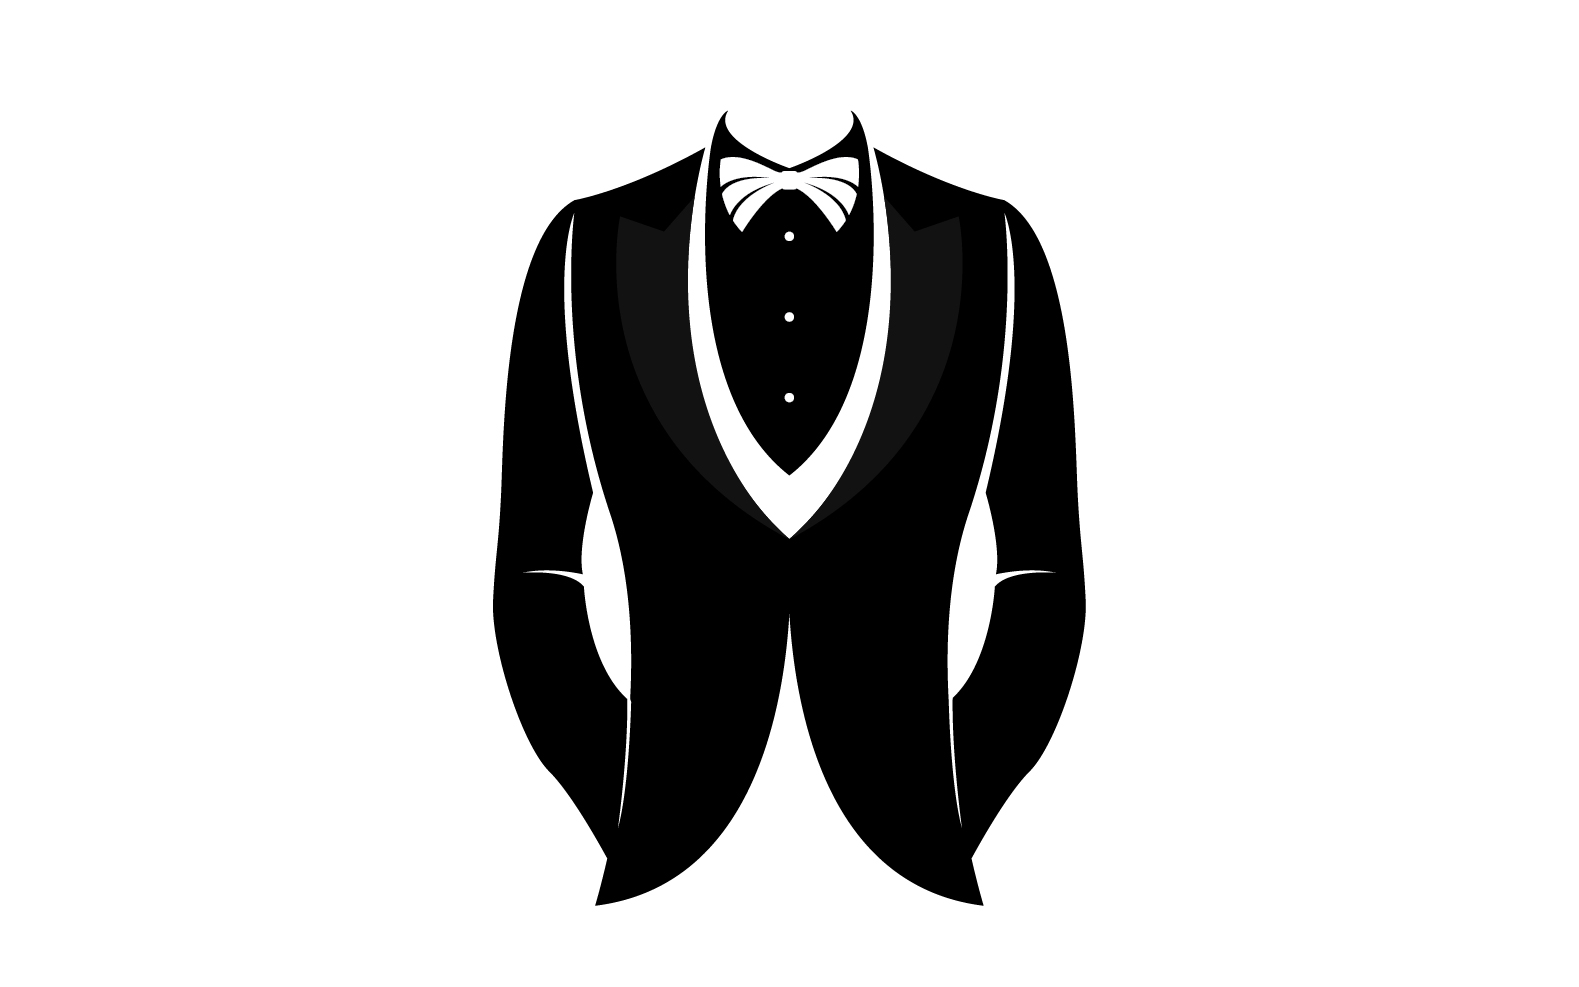 Maid suit logo and symbol vector design v7